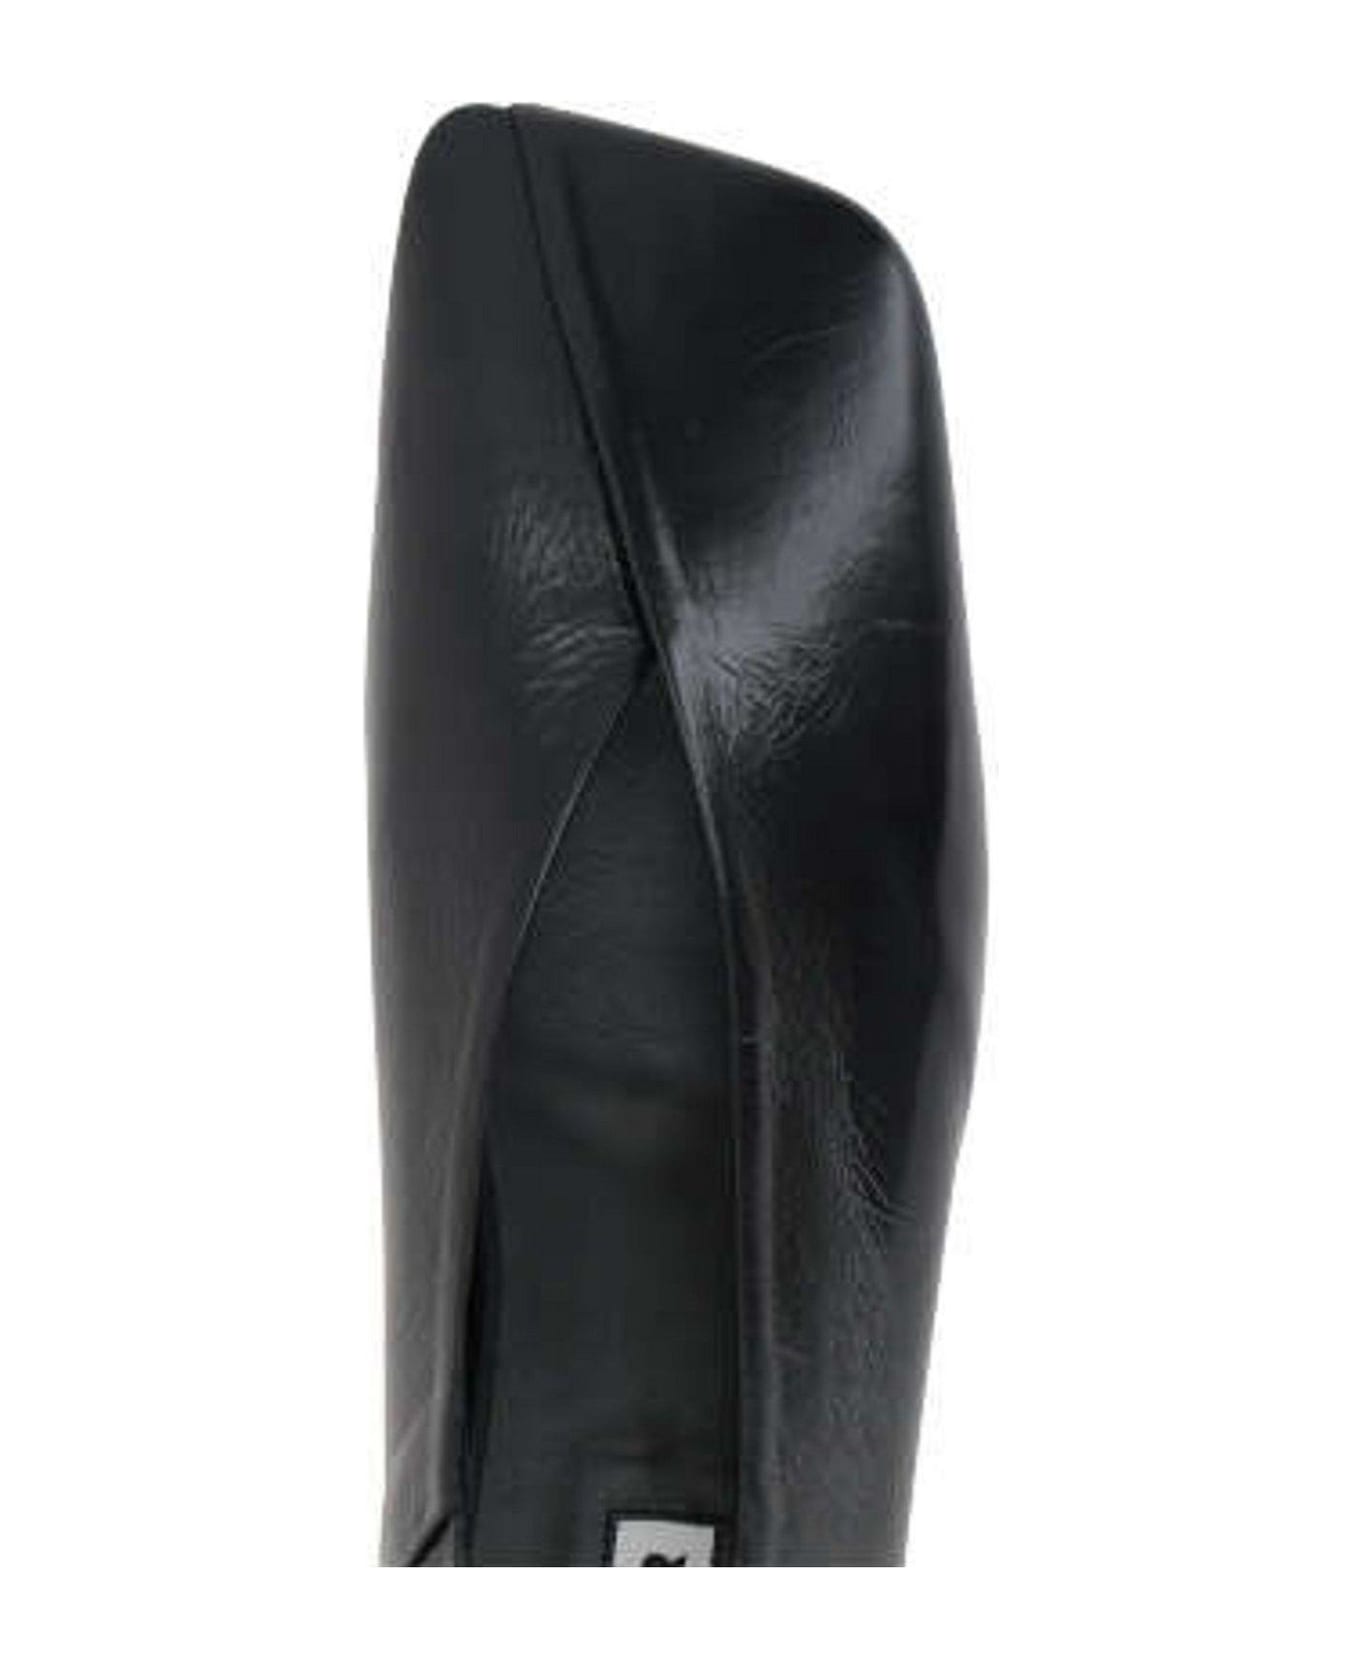 Jil Sander Asymmetric Square Toe Ballerina Shoes - 001 フラットシューズ